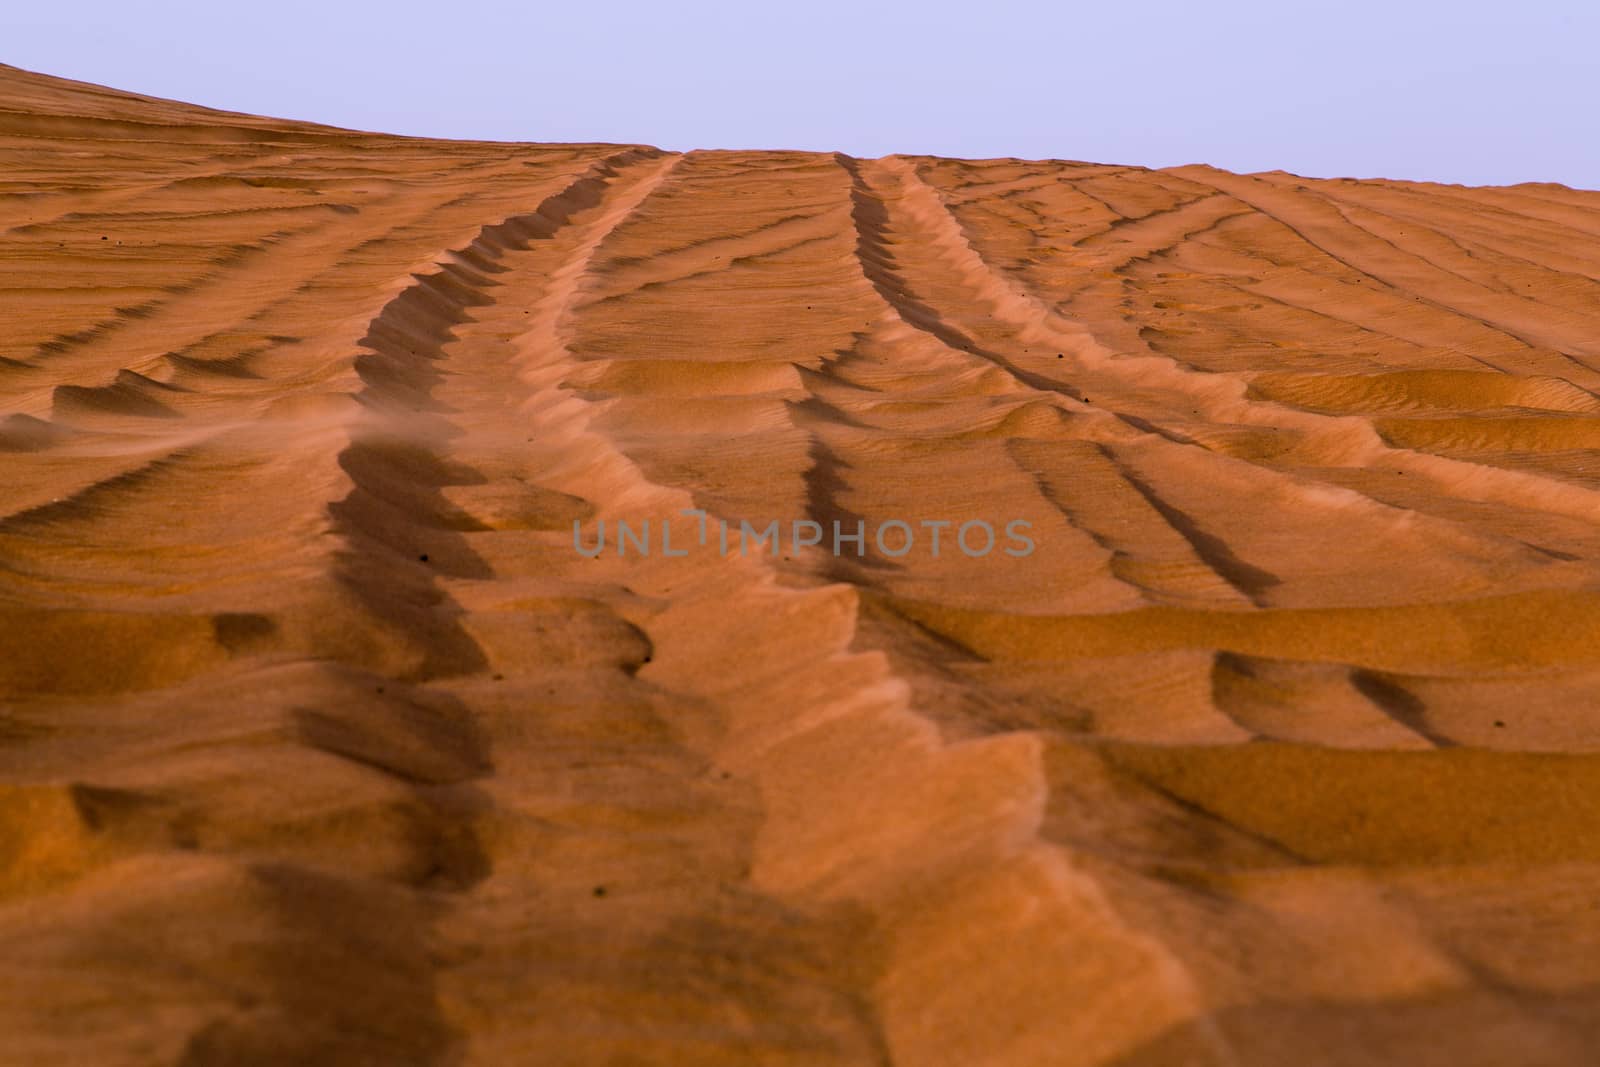 The Red sand of the Pink Rock Desert, Sharjah, Dubai, UAE